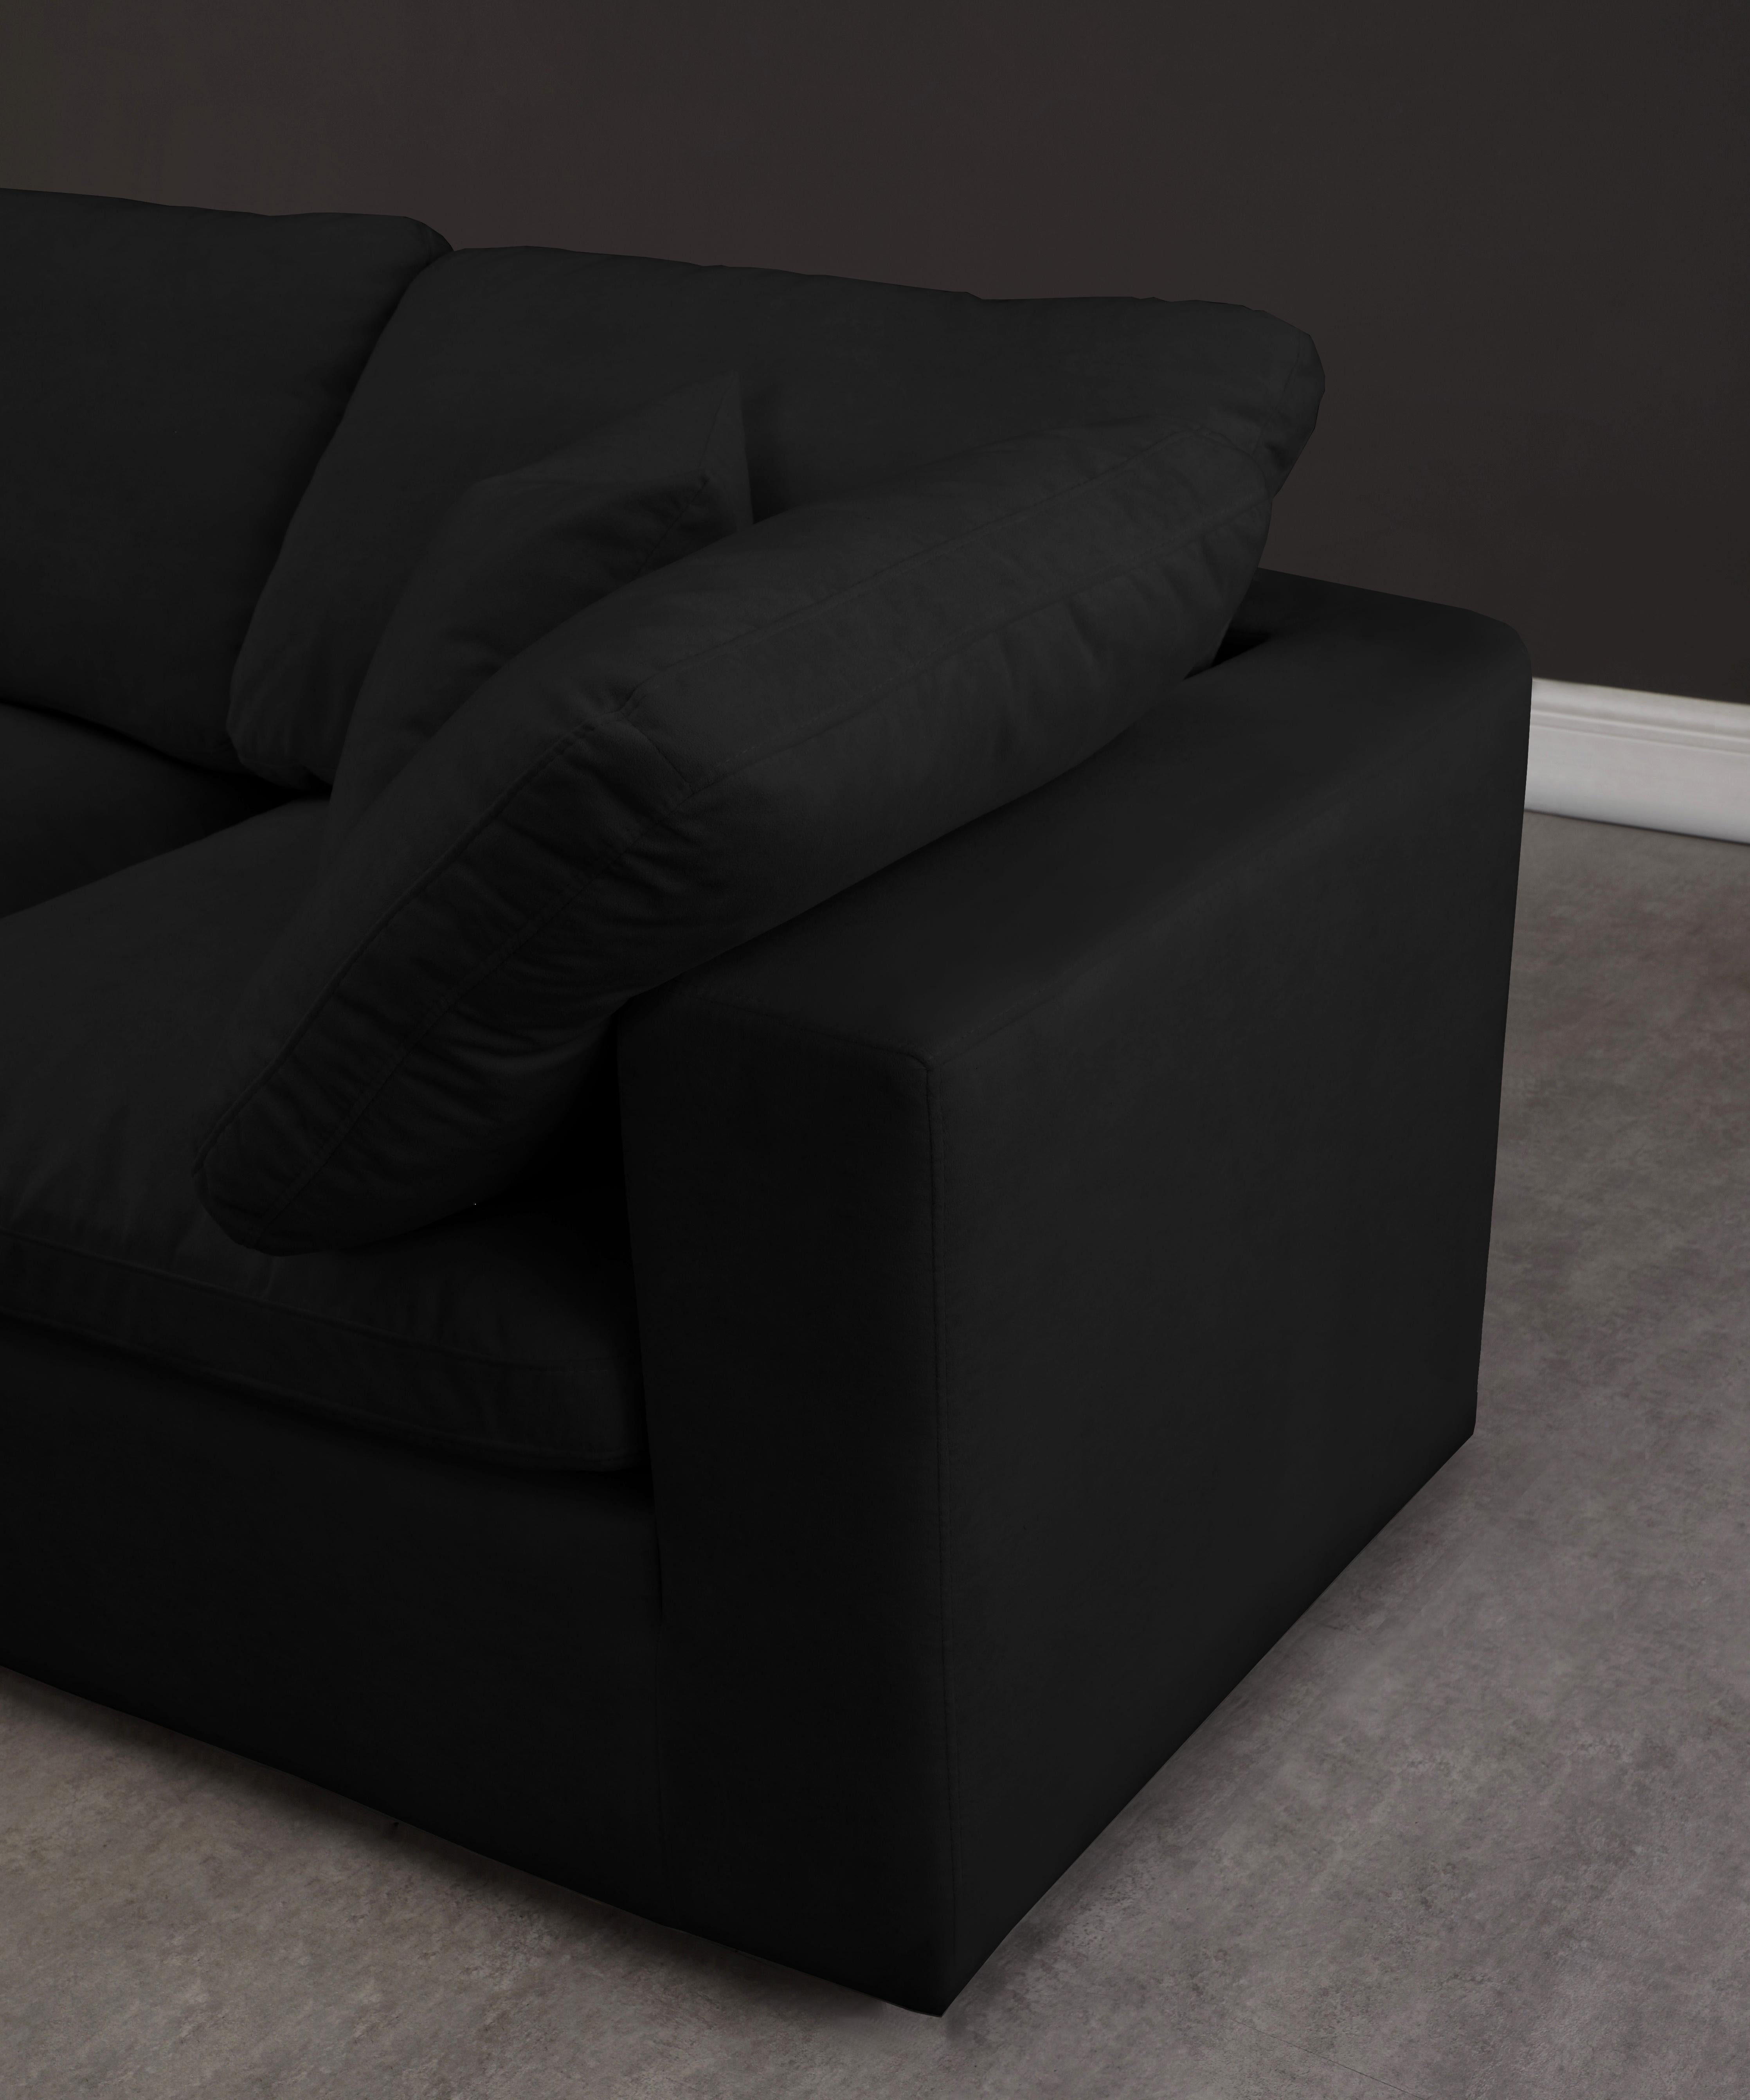 Cozy Black Velvet Cloud Modular Armless Sofa